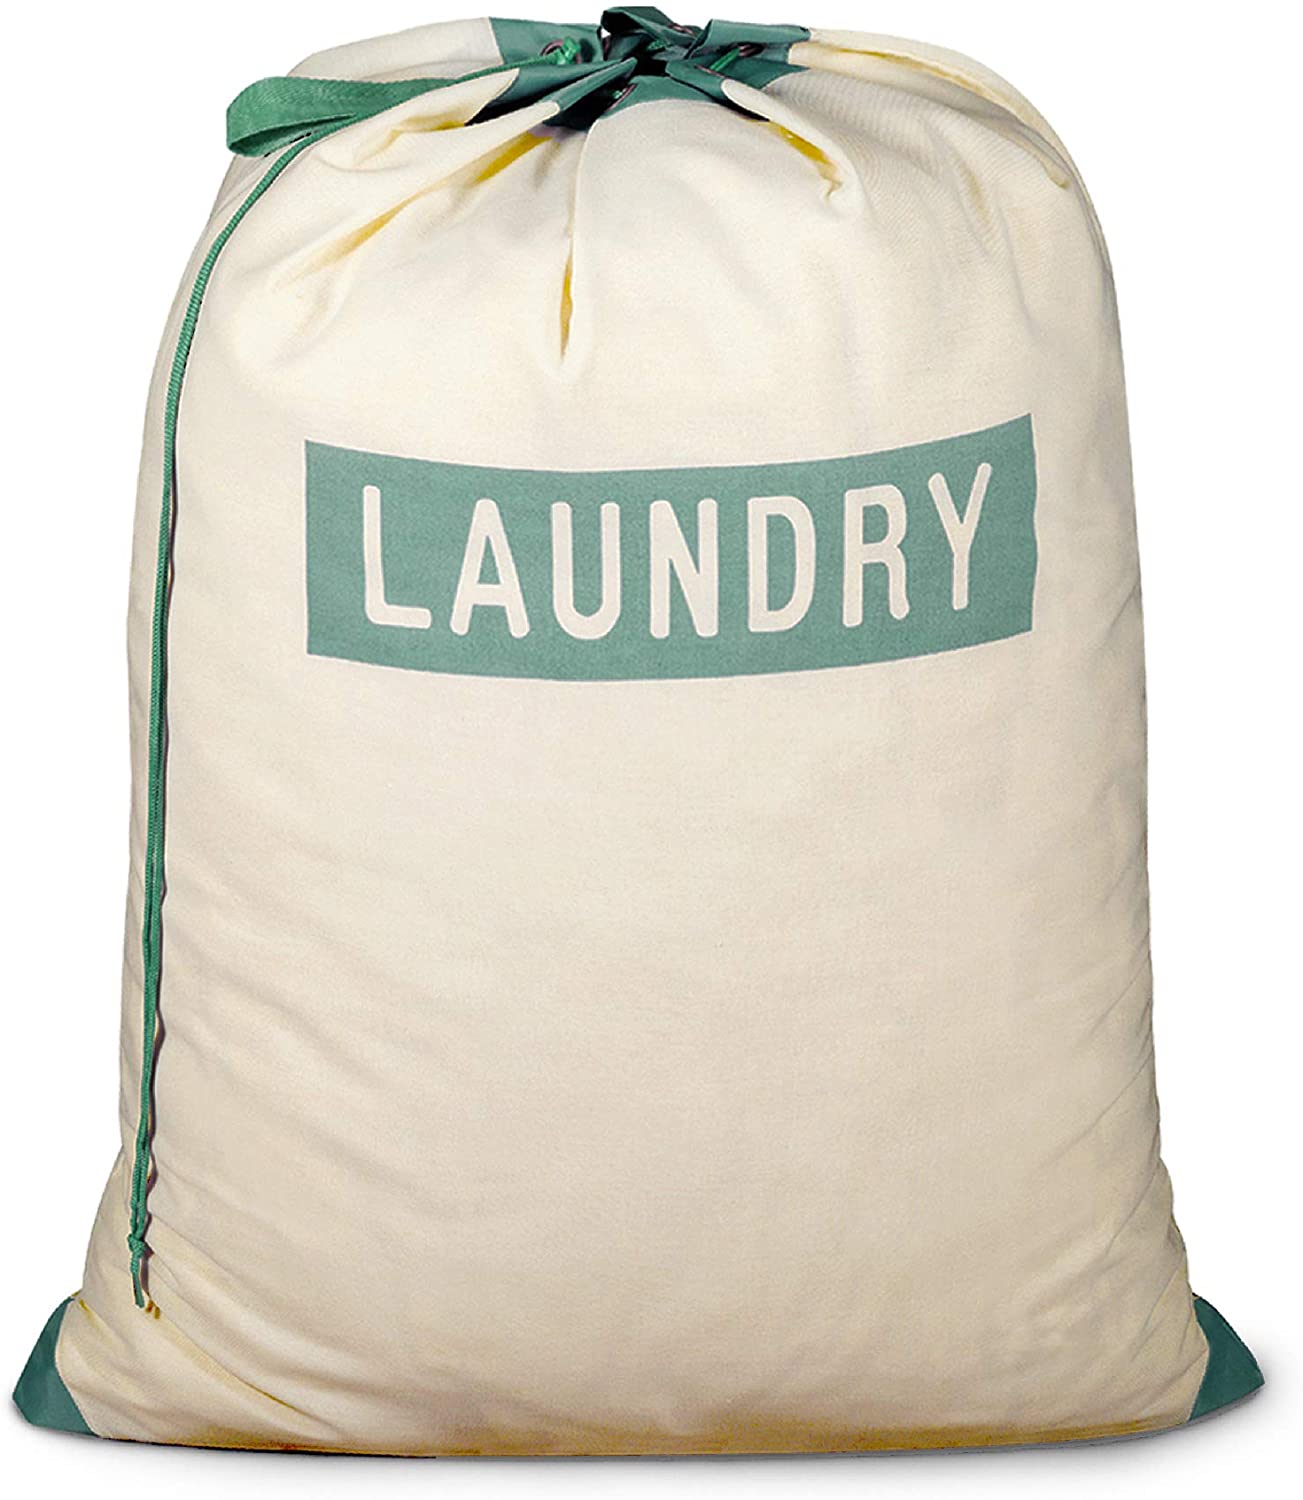 Laundry Bag with Push Lock Drawstring - Canvas